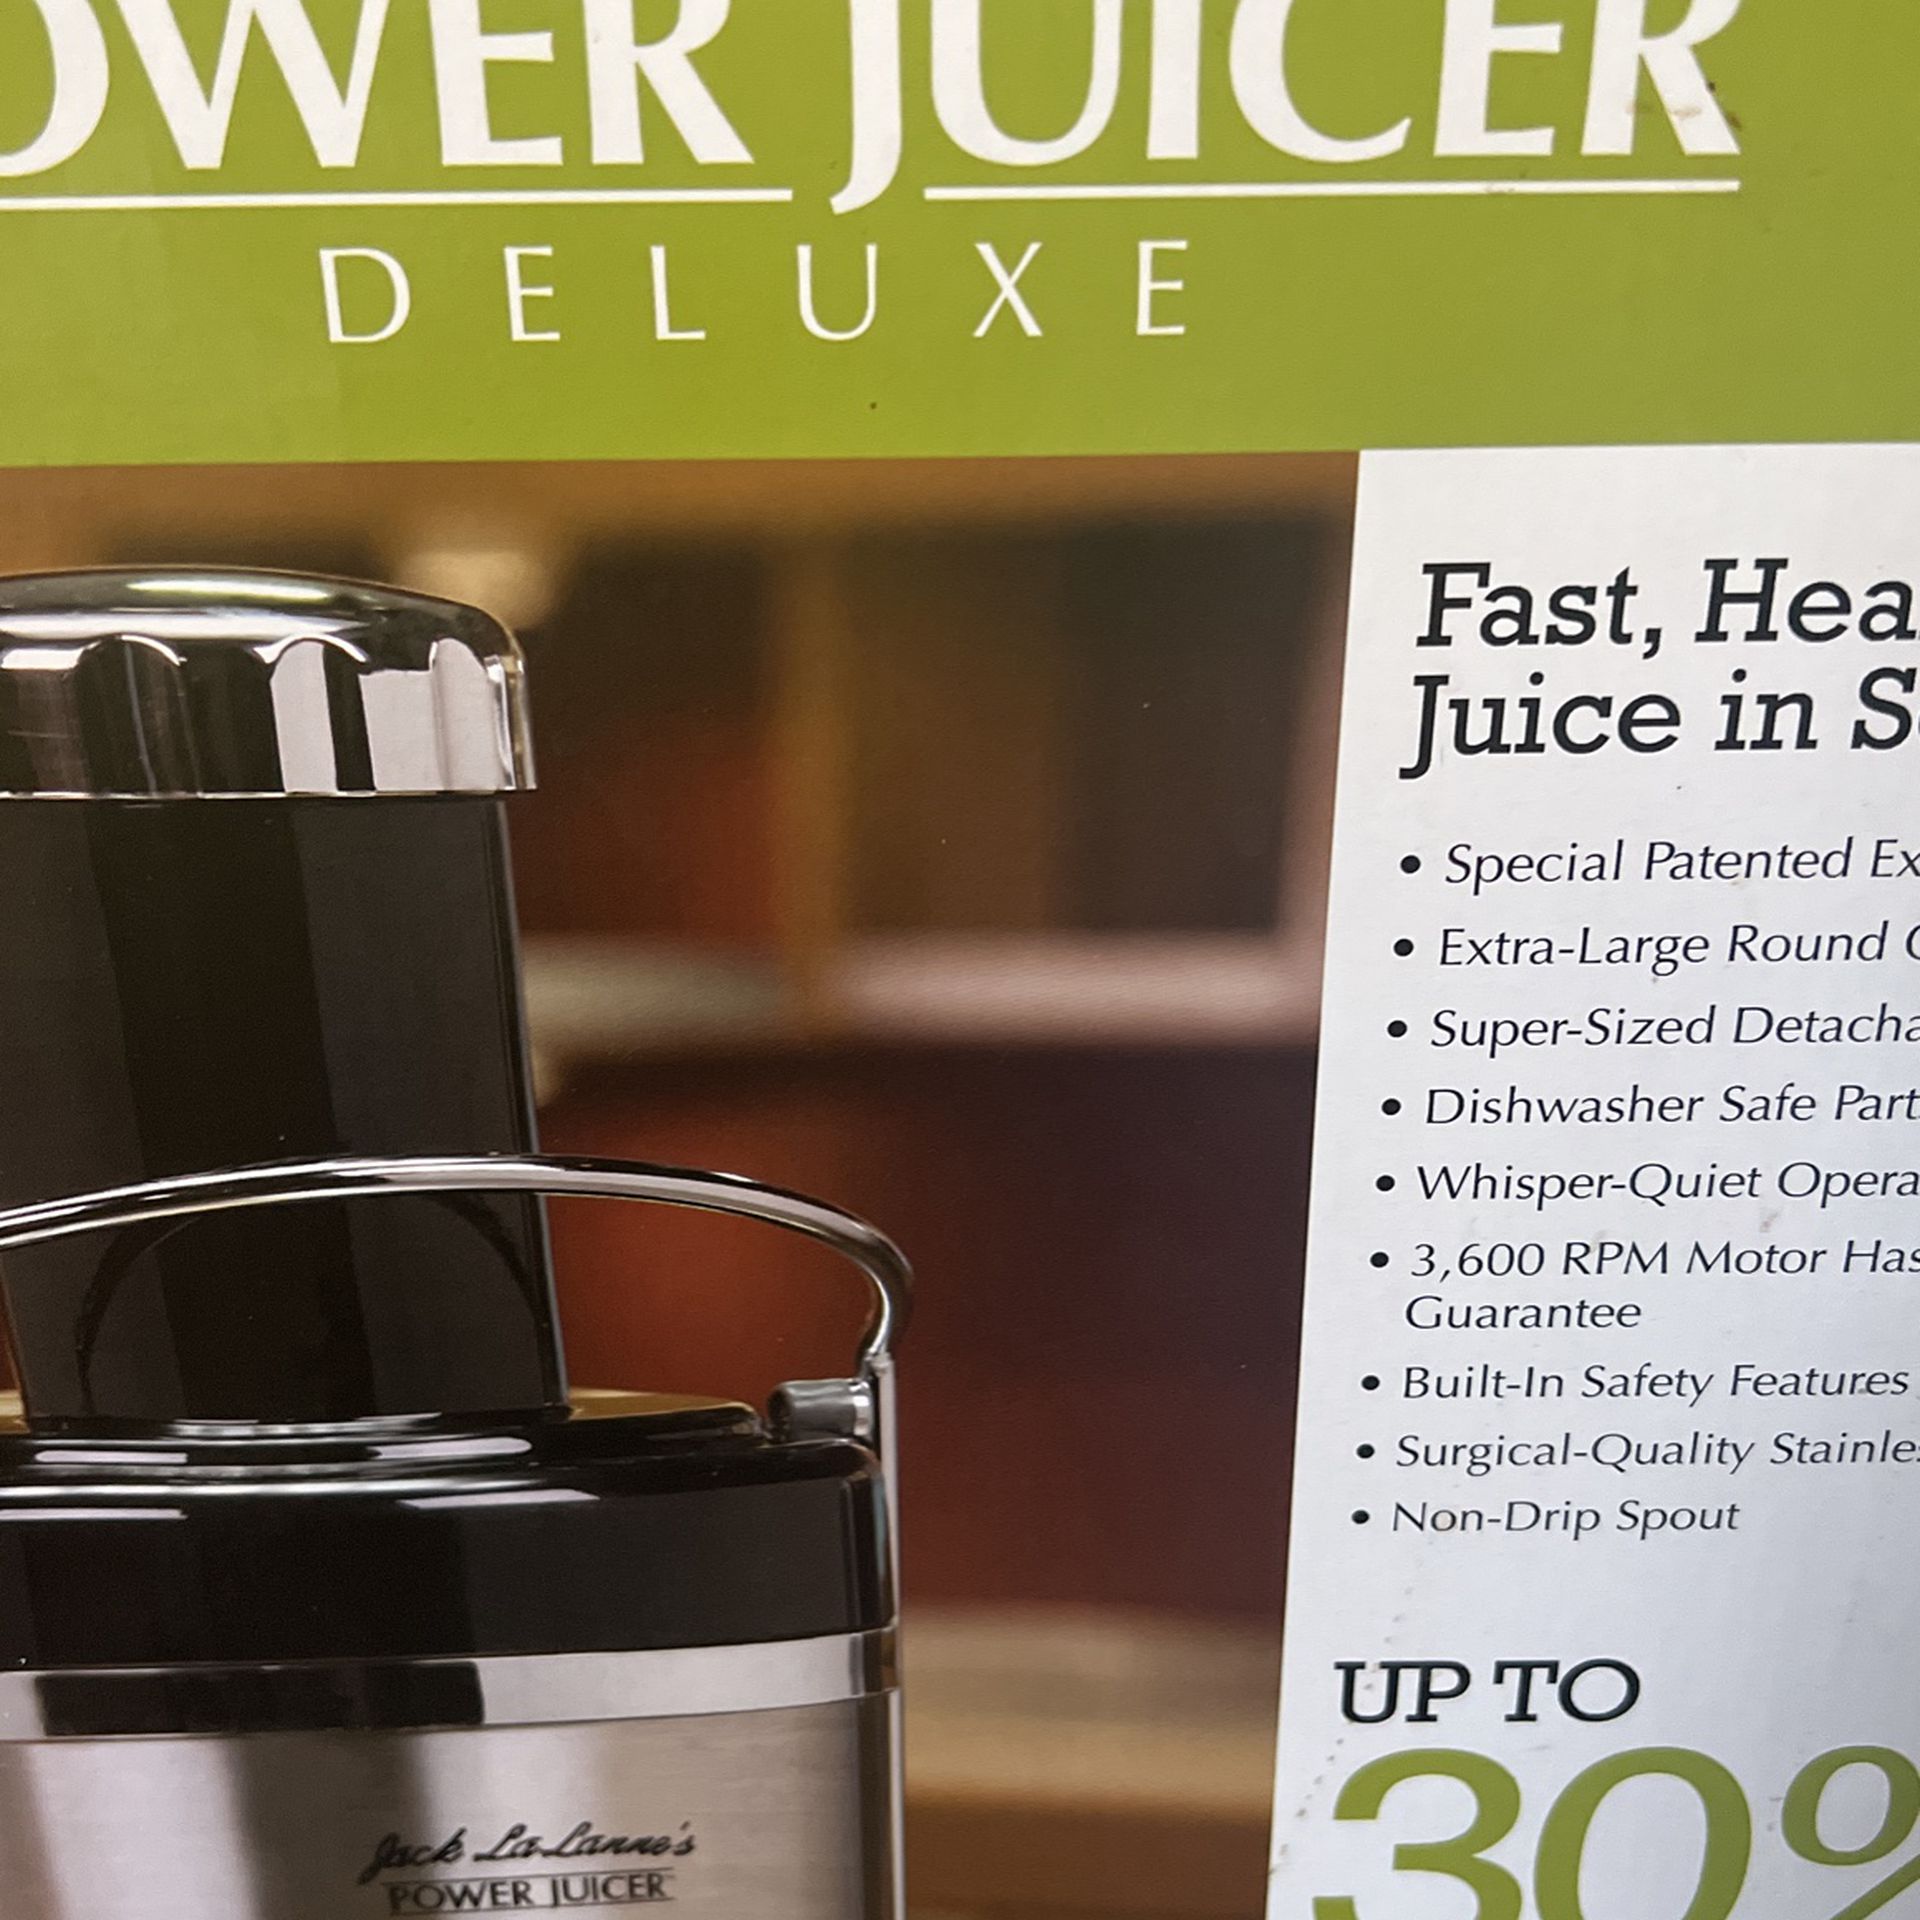 New Power Juicer $60